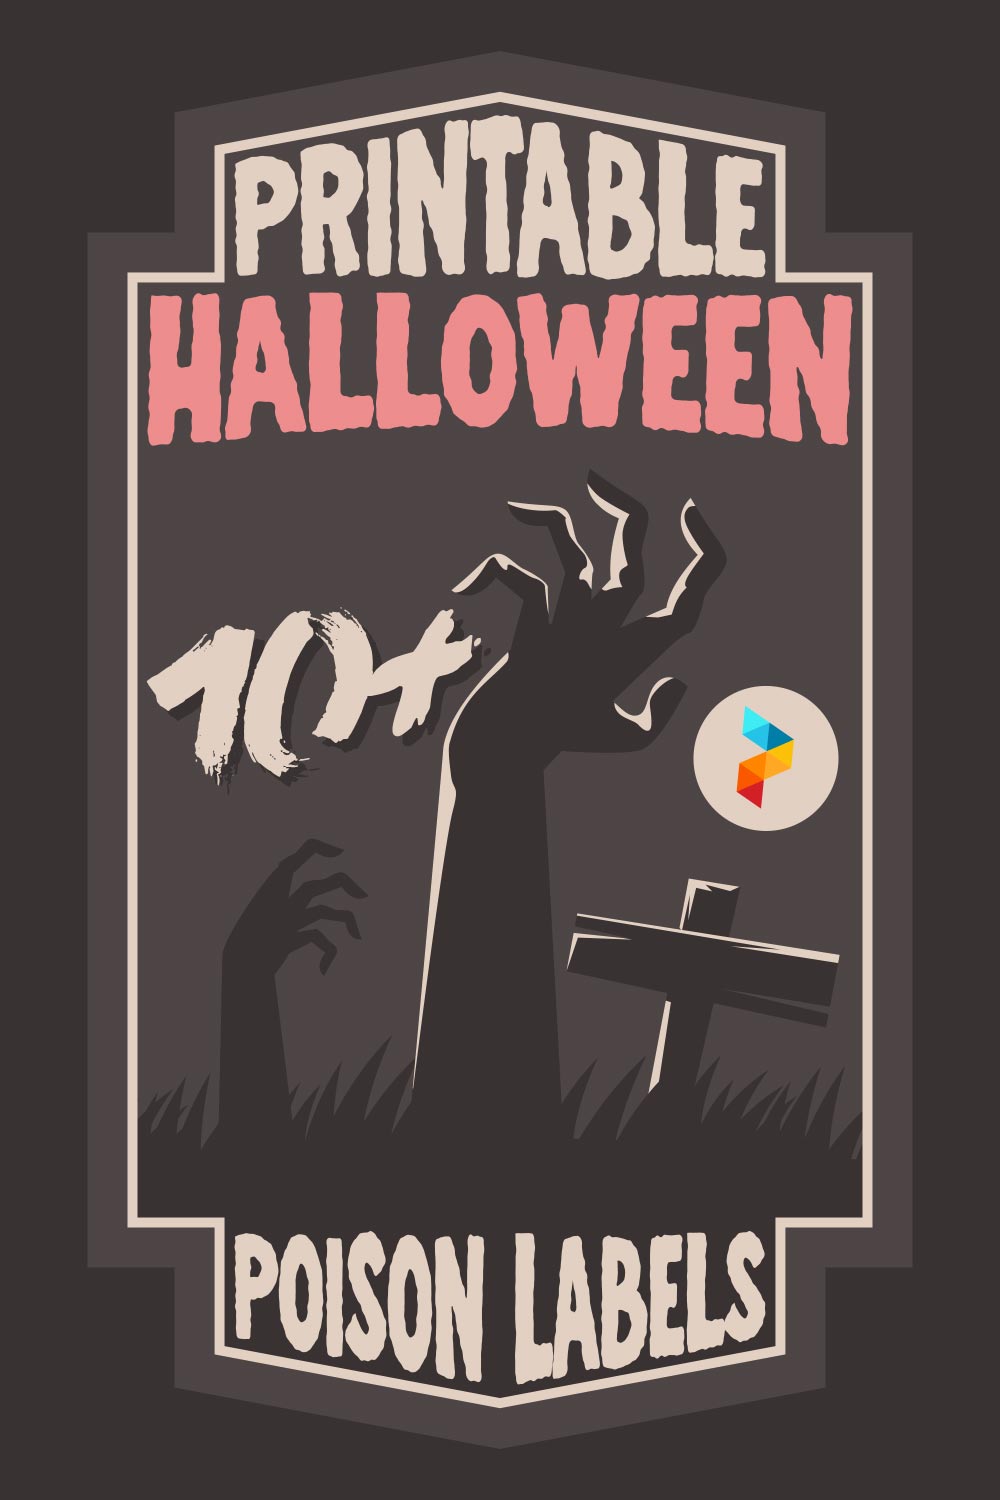 Printable Halloween Poison Labels